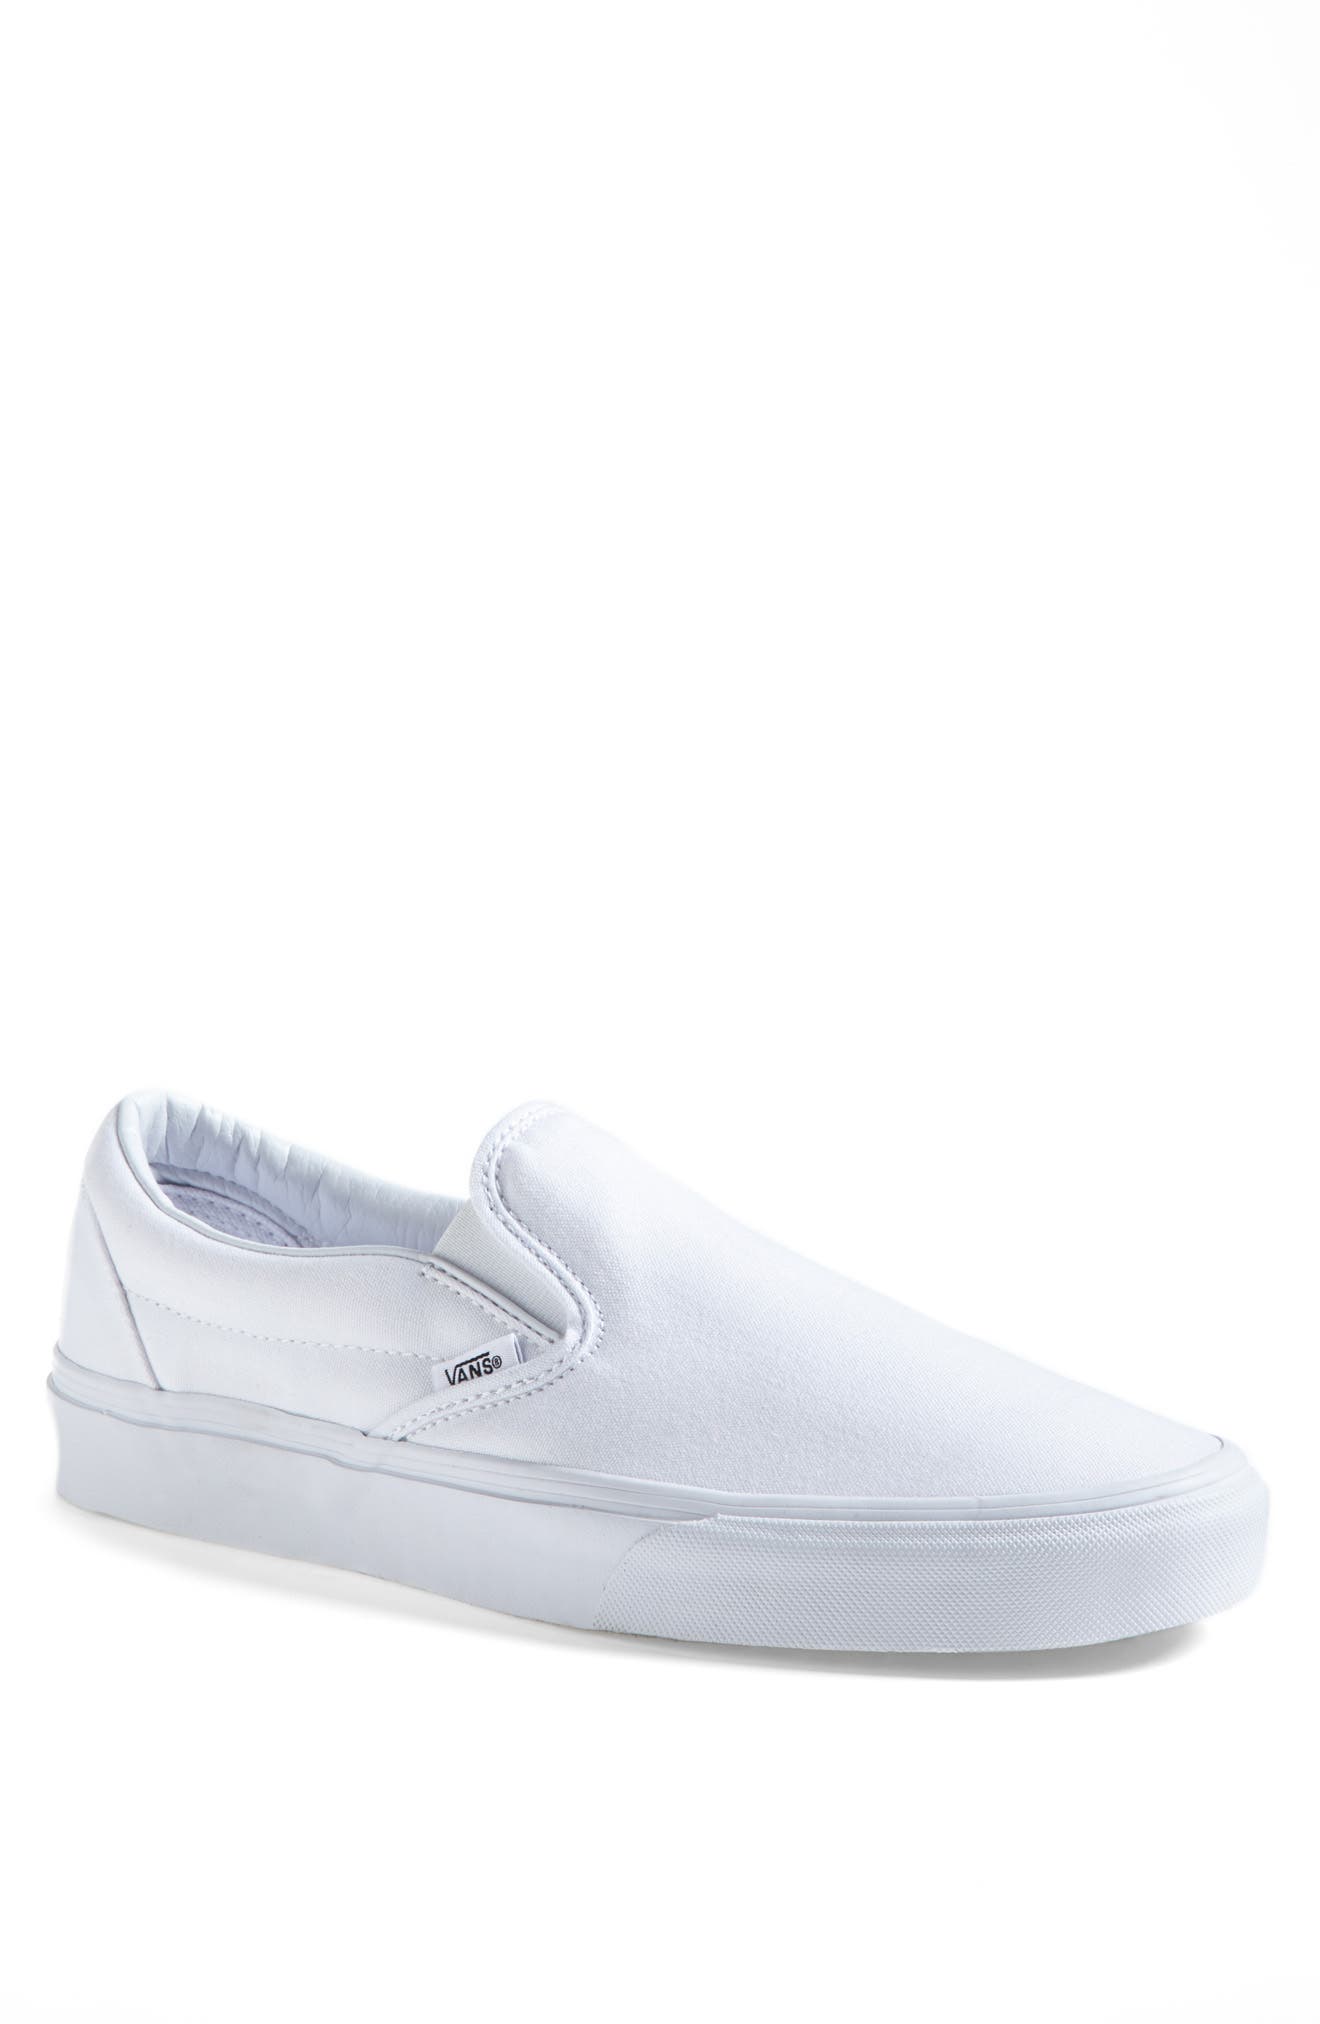 vans shoes for boys white